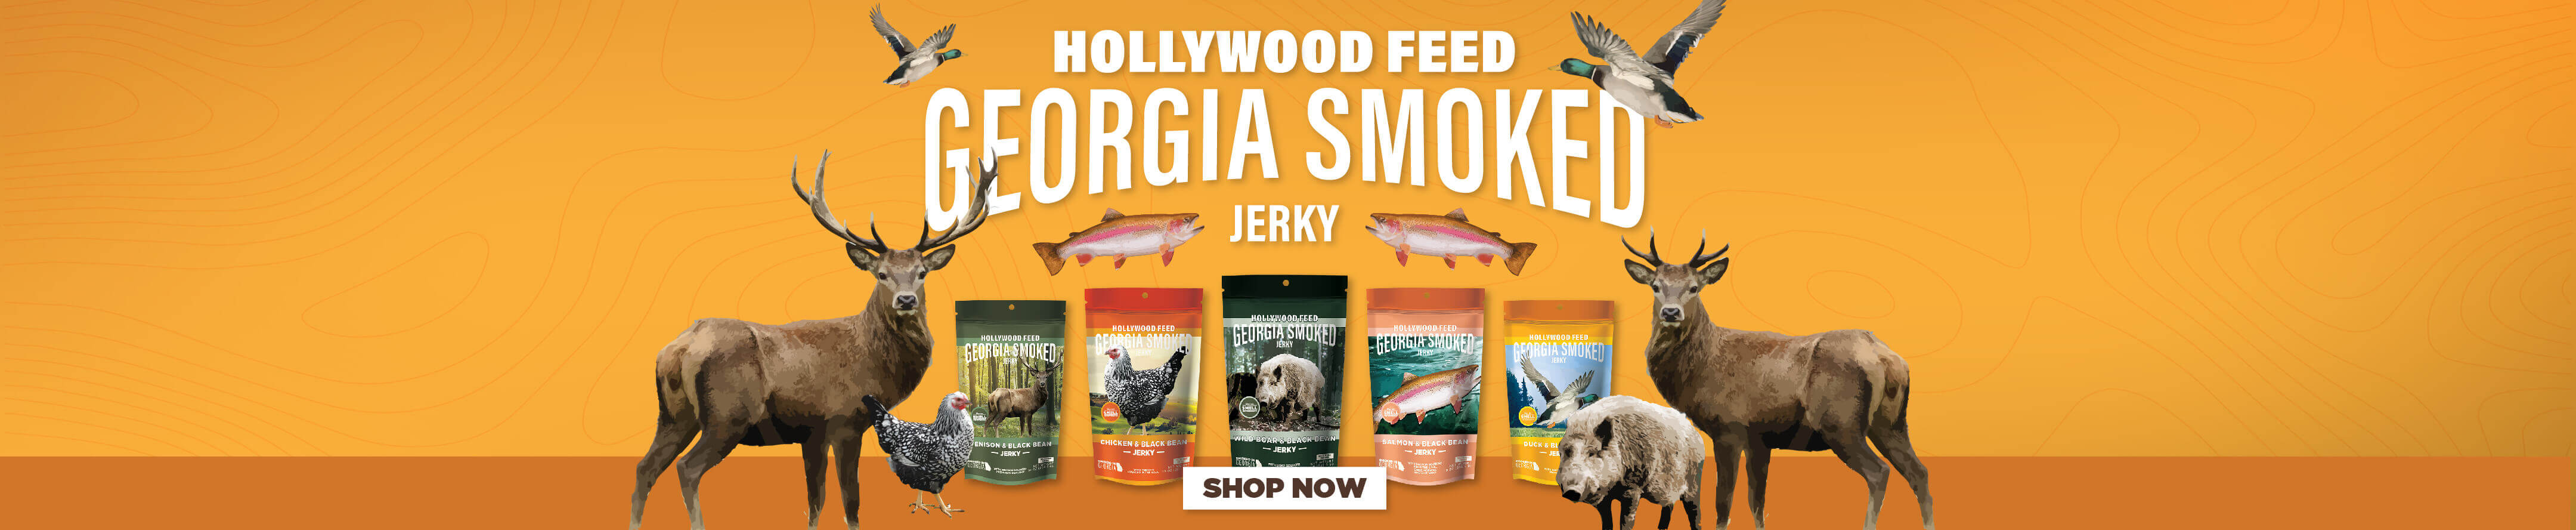 Hollywood Feed Georgia Smoked Jerky - Shop Now